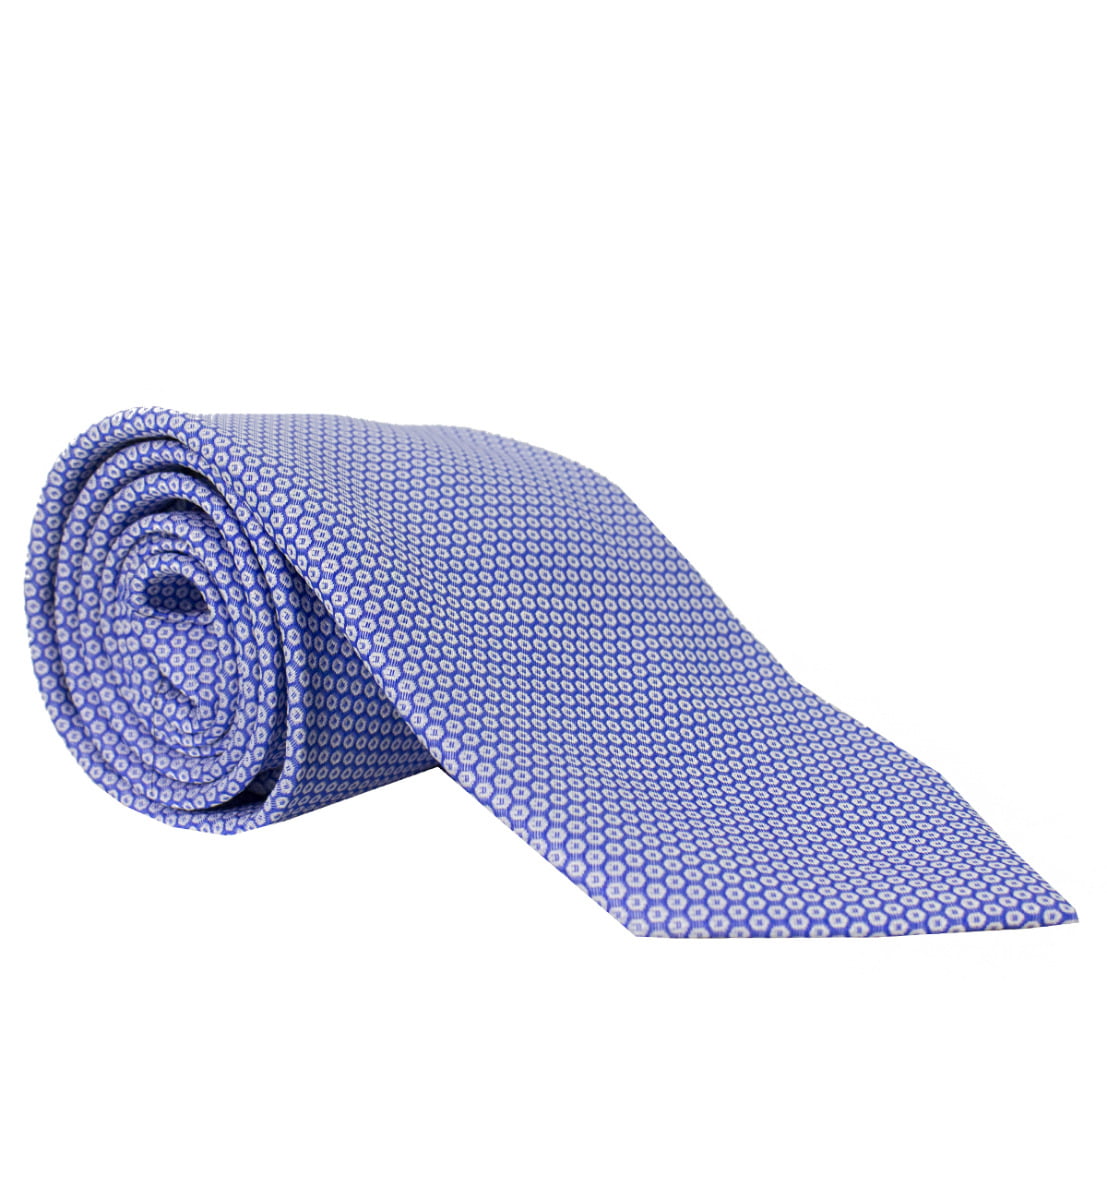 Cravatta uomo blu fantasia esagoni bianca 8cm di larghezza made in italy